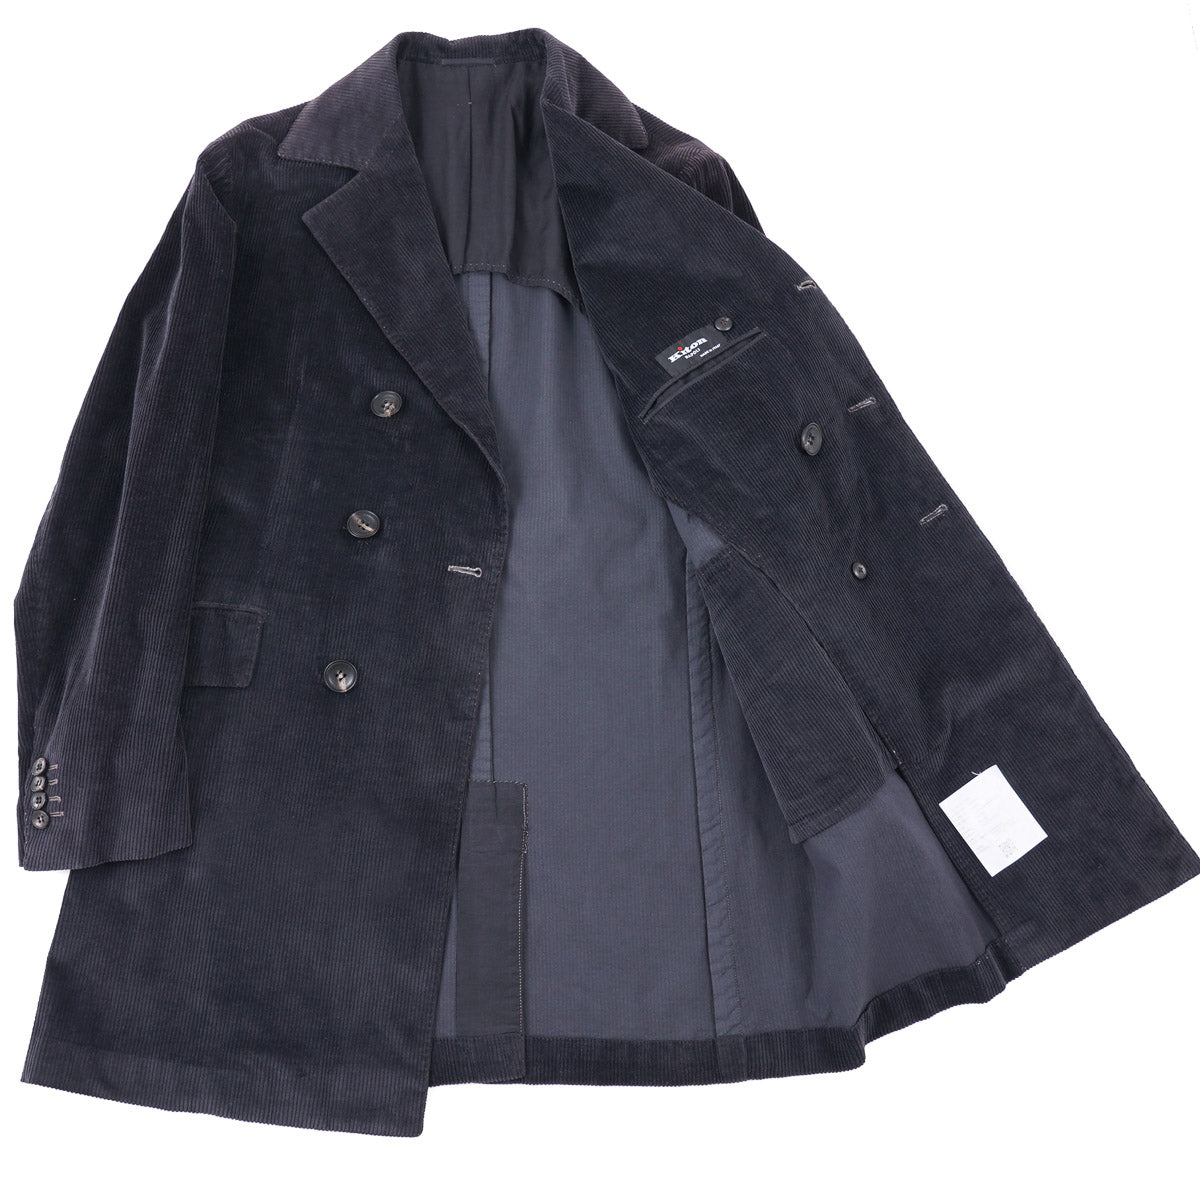 Kiton Cotton-Cashmere Corduroy Overcoat - Top Shelf Apparel